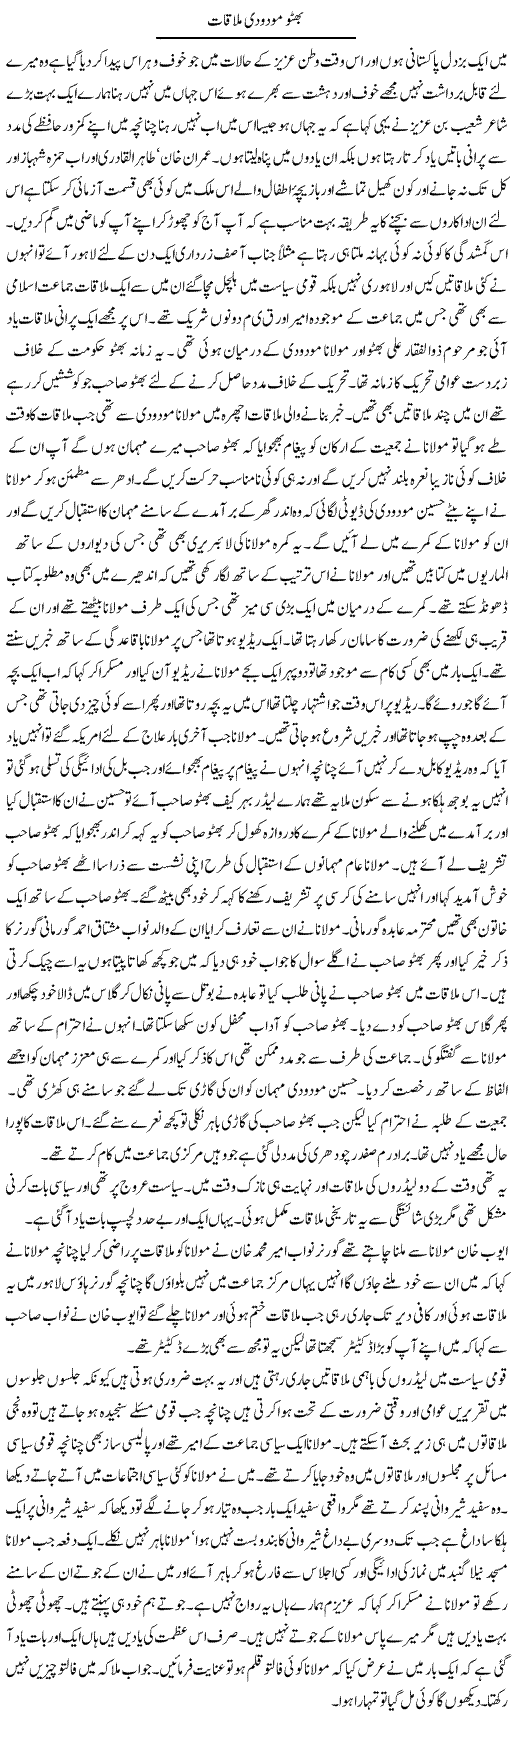 Bhutto Modudi Mulaqat | Abdul Qadir Hassan | Daily Urdu Columns